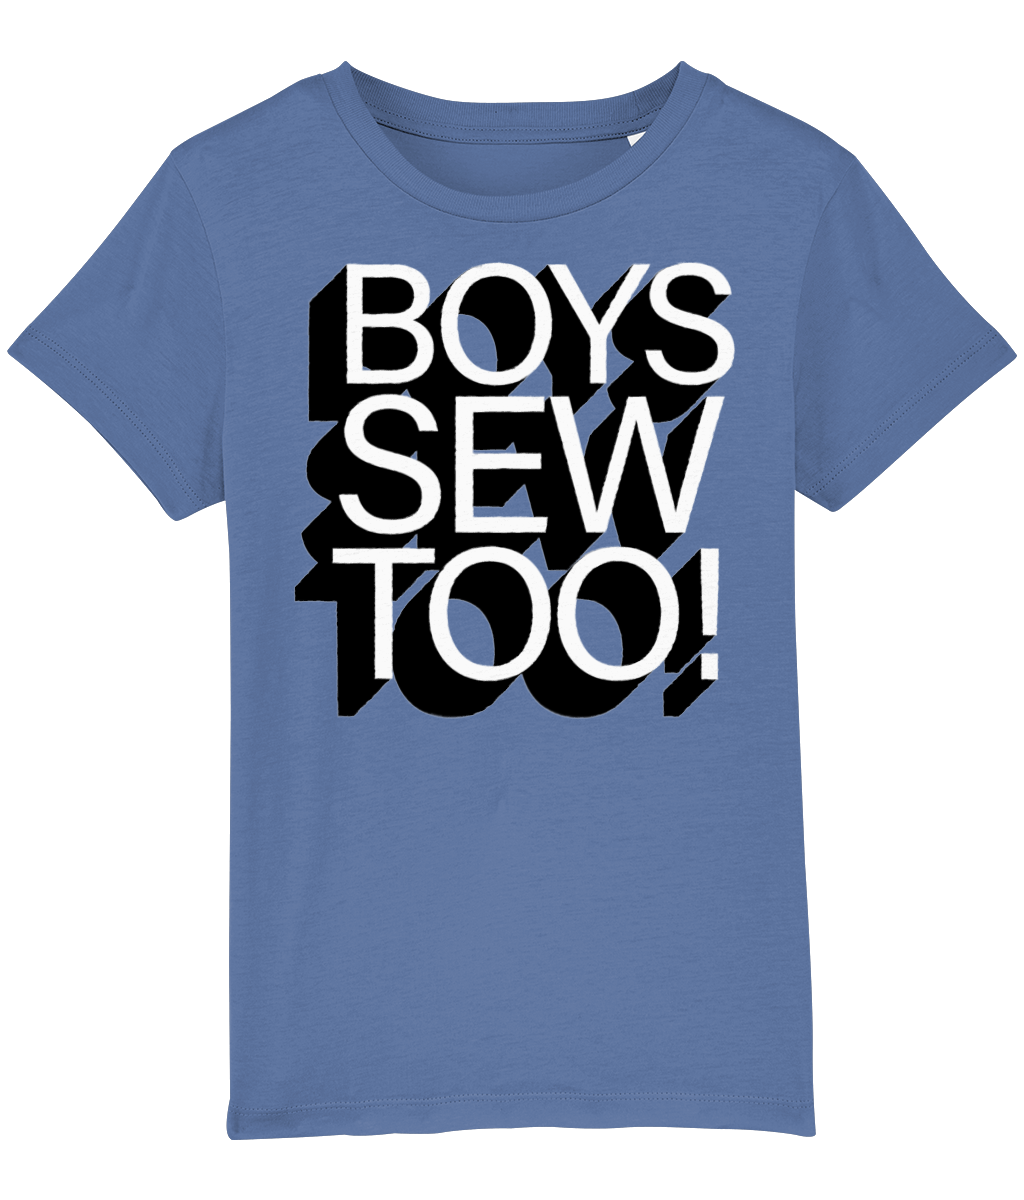 Boys Sew Too Kids T-Shirt - Black and White